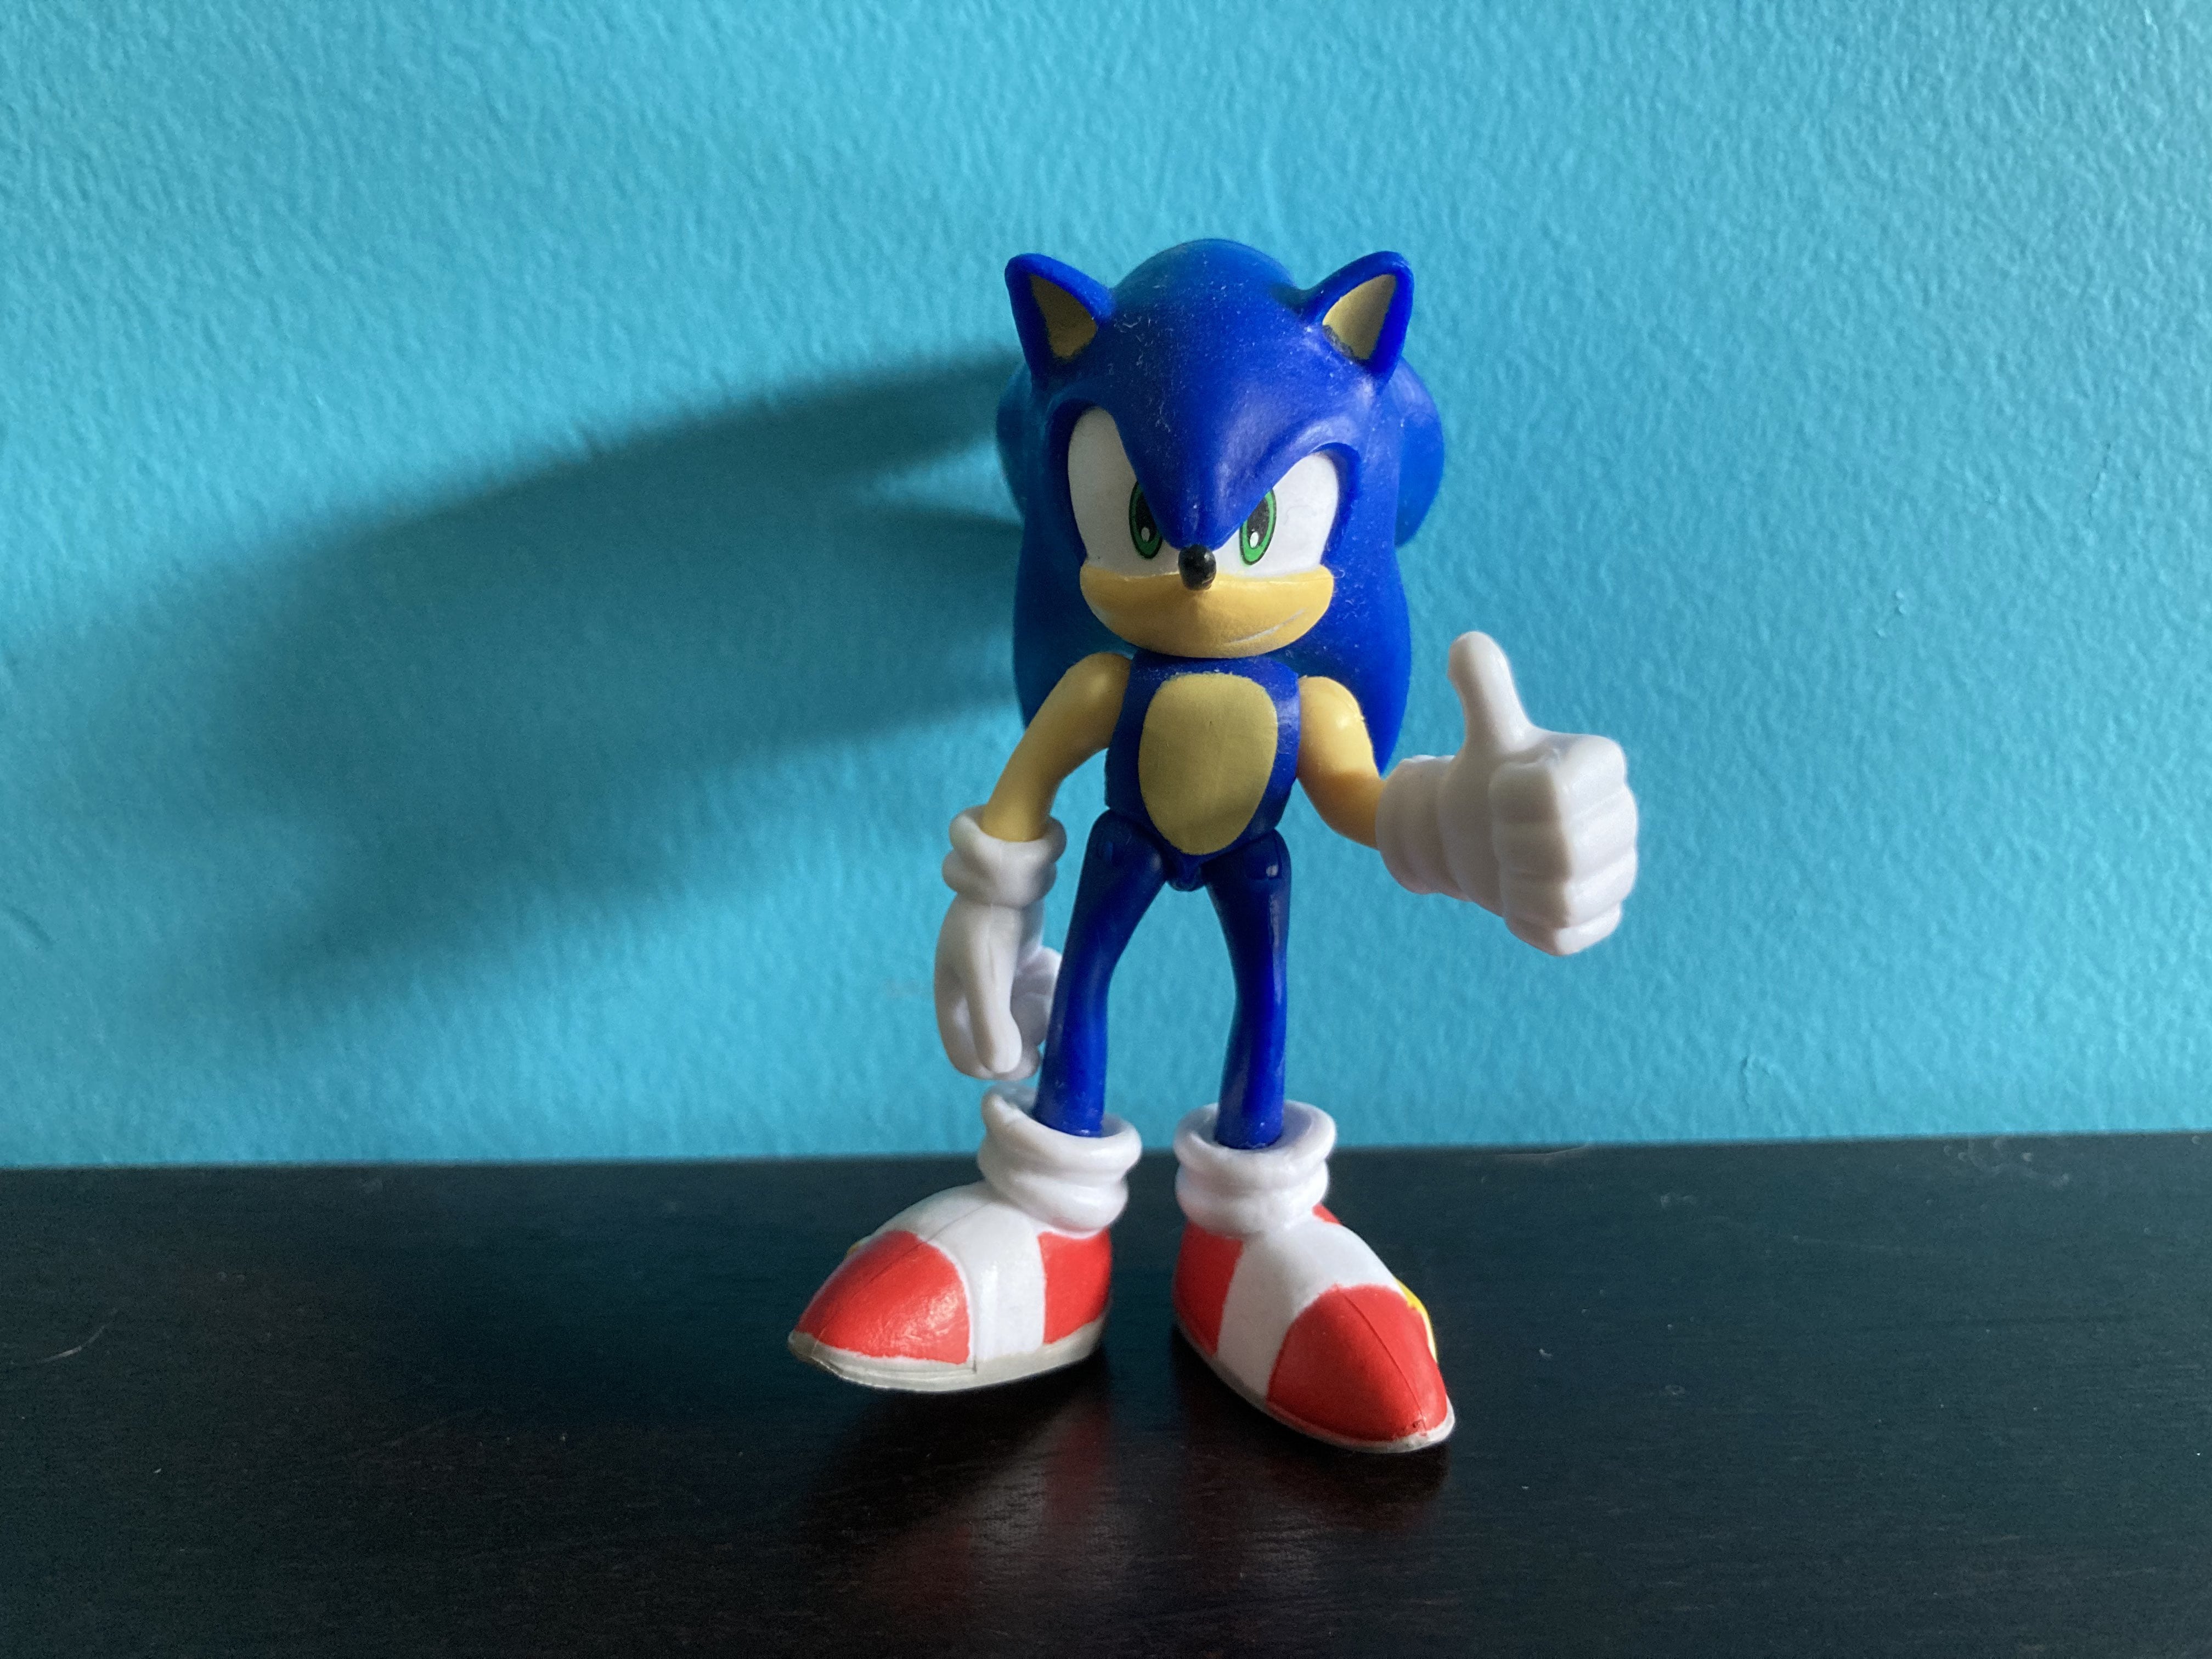 Small Sonic figure